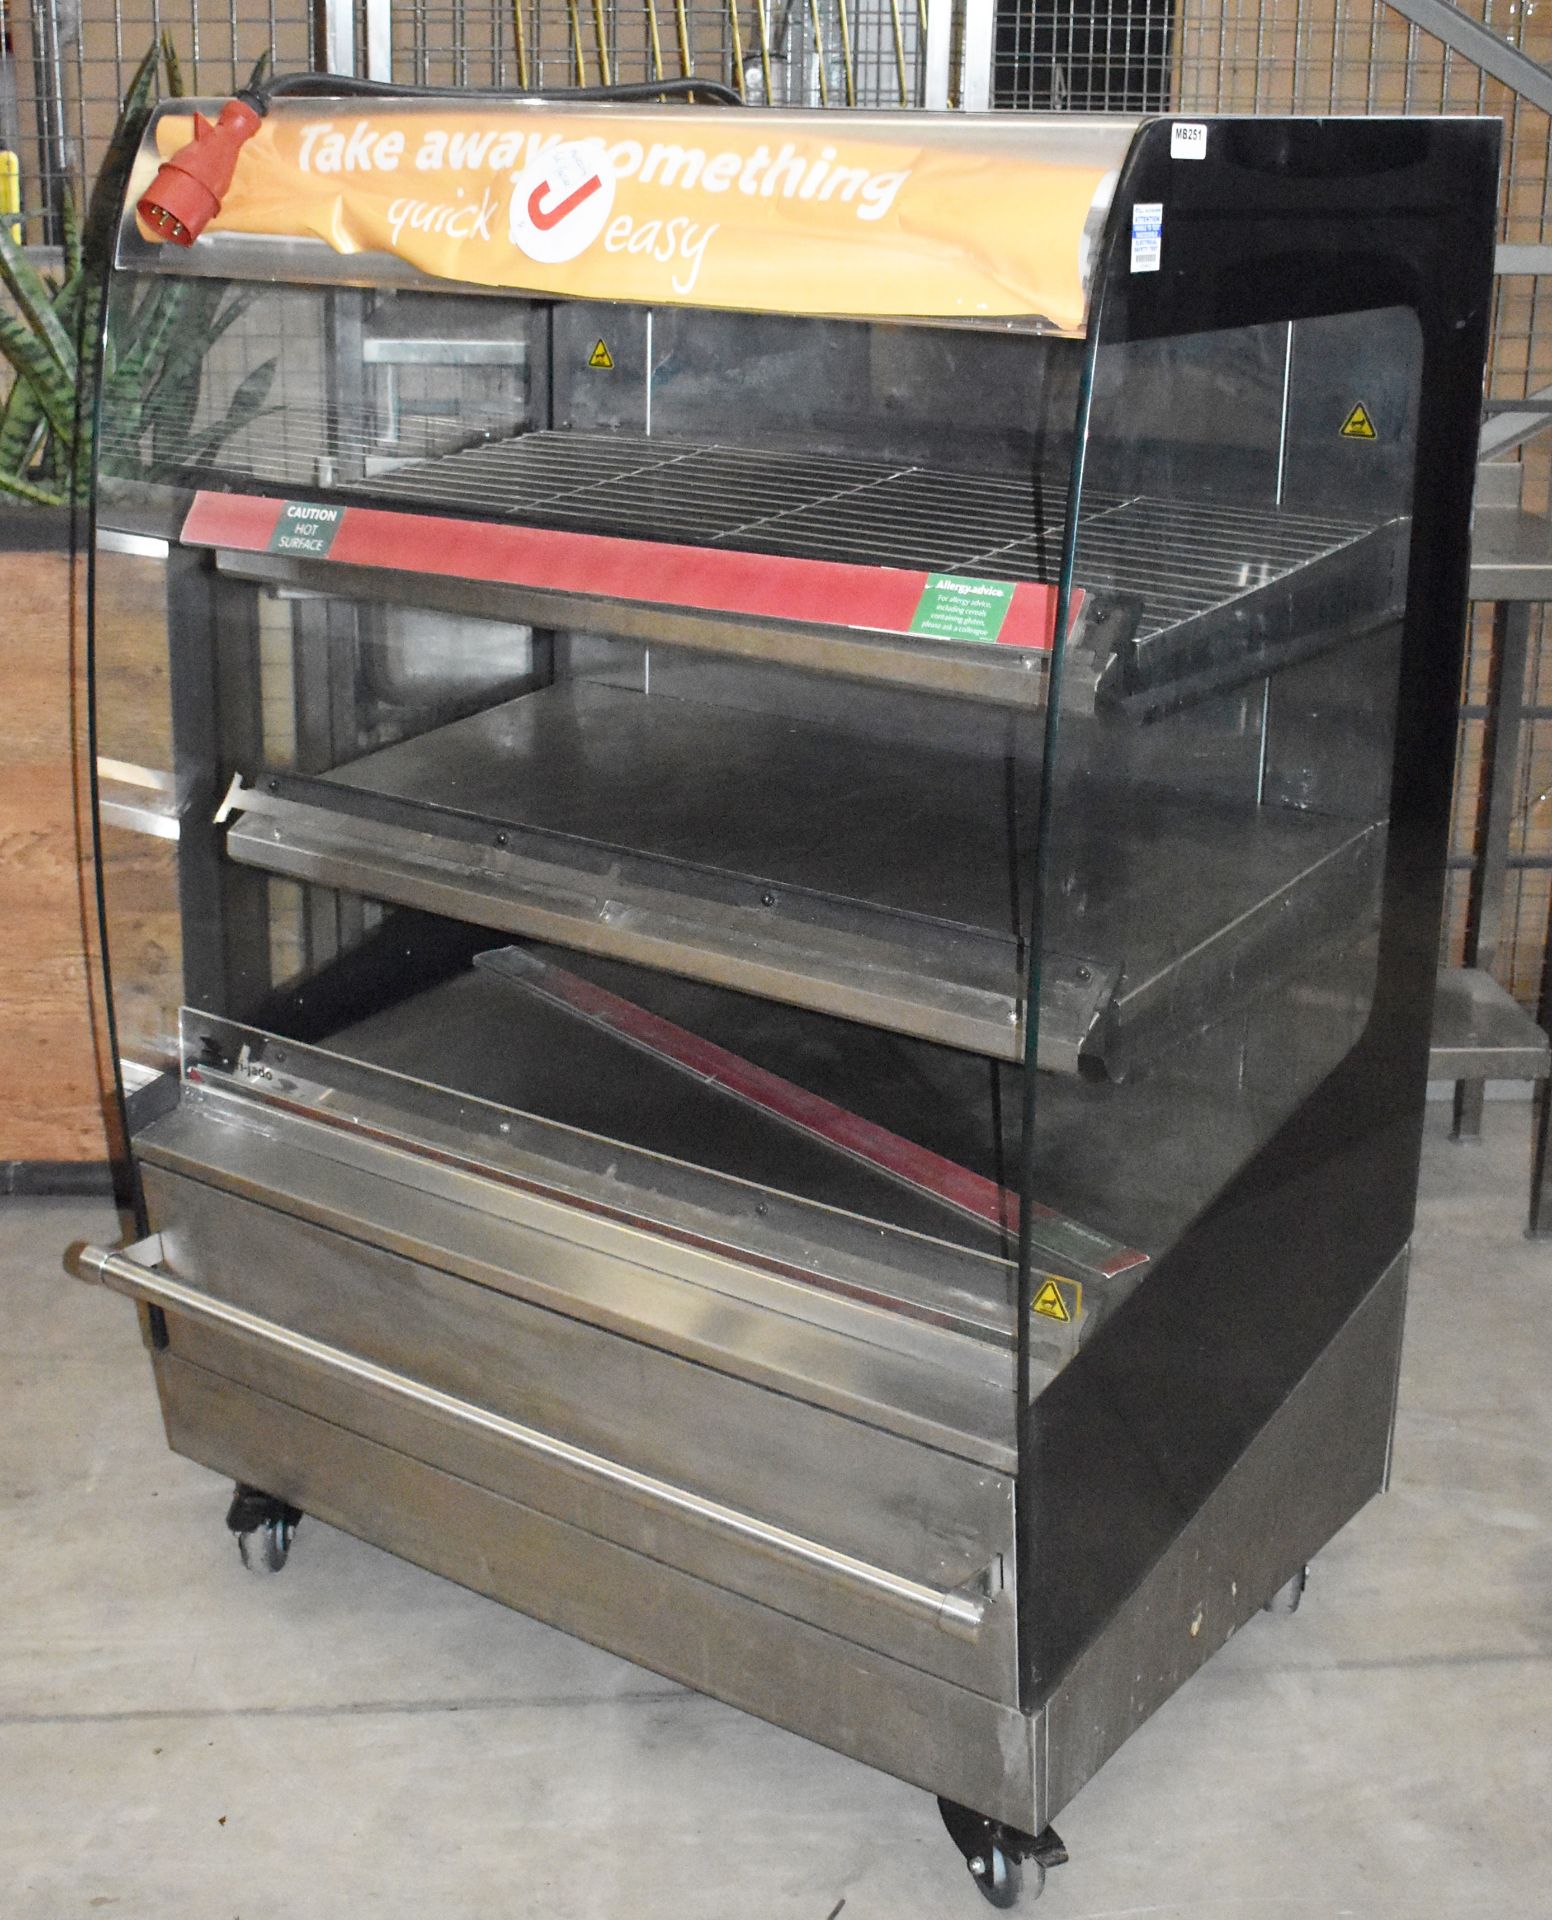 1 x Fri-Jado Three Tier Multi Deck Hot Food Warmer Heated Display Unit - Contemporary Modern